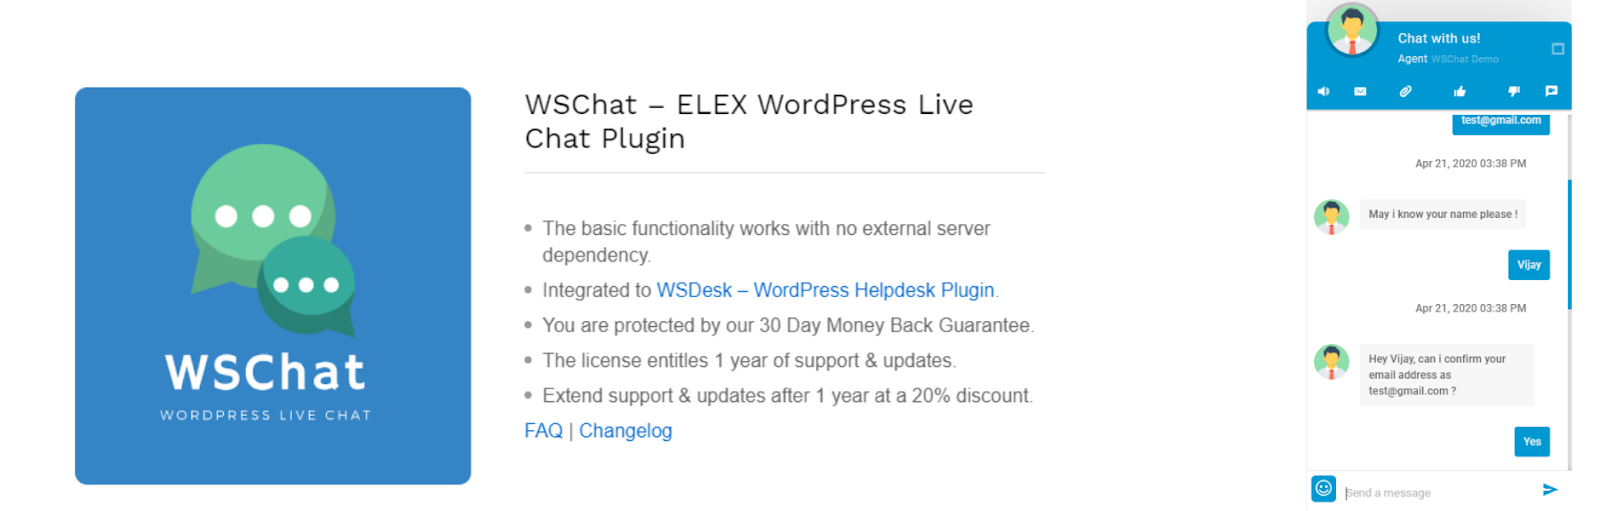 WSChat - ELEX WordPress Live Chat Plugin